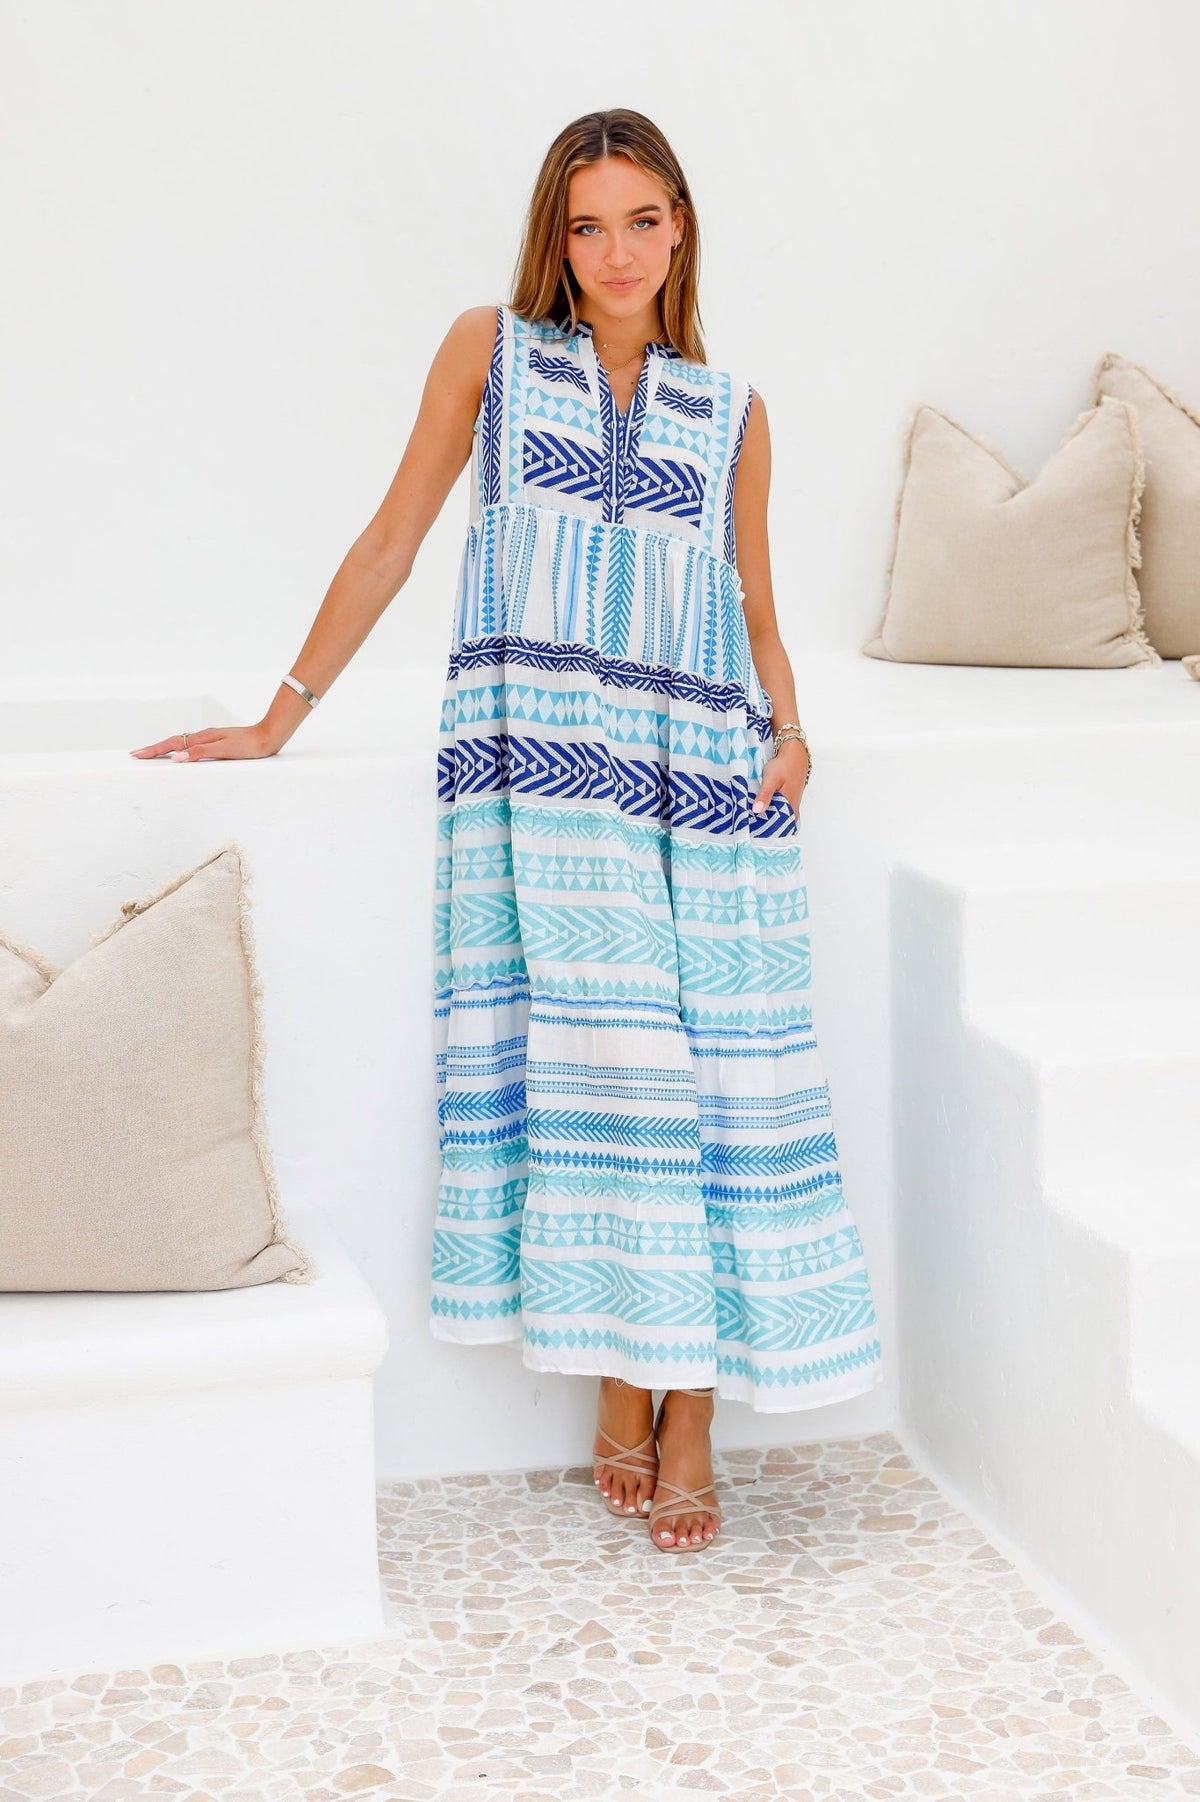 Mediterranean Maxi Dress - Blue/Seafoam - Sare StoreJoop and GypsyDress